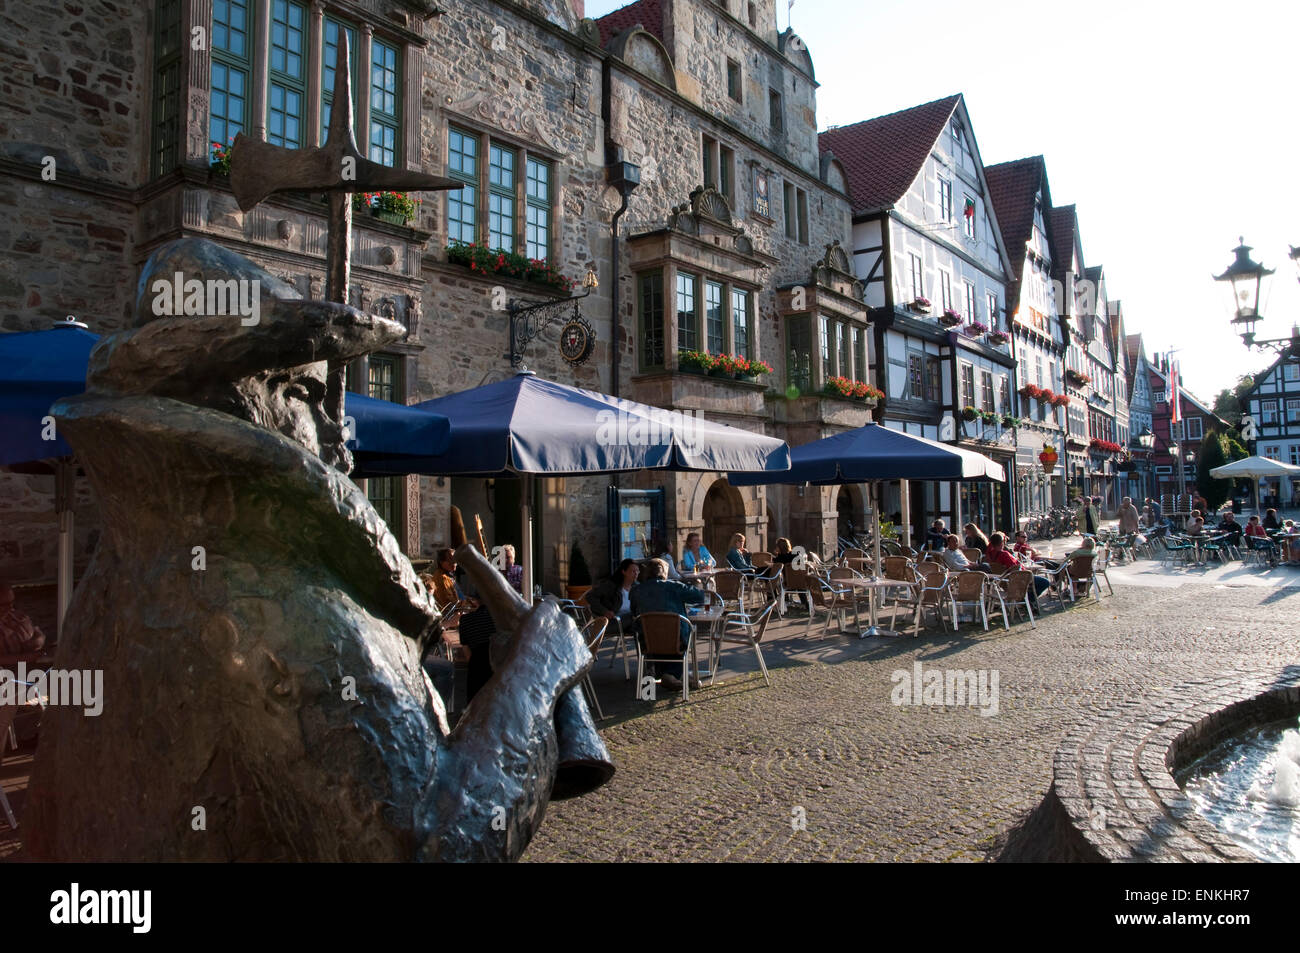 market square, historic old town, Rinteln, Weserbergland, Lower Saxony, Germany Stock Photo